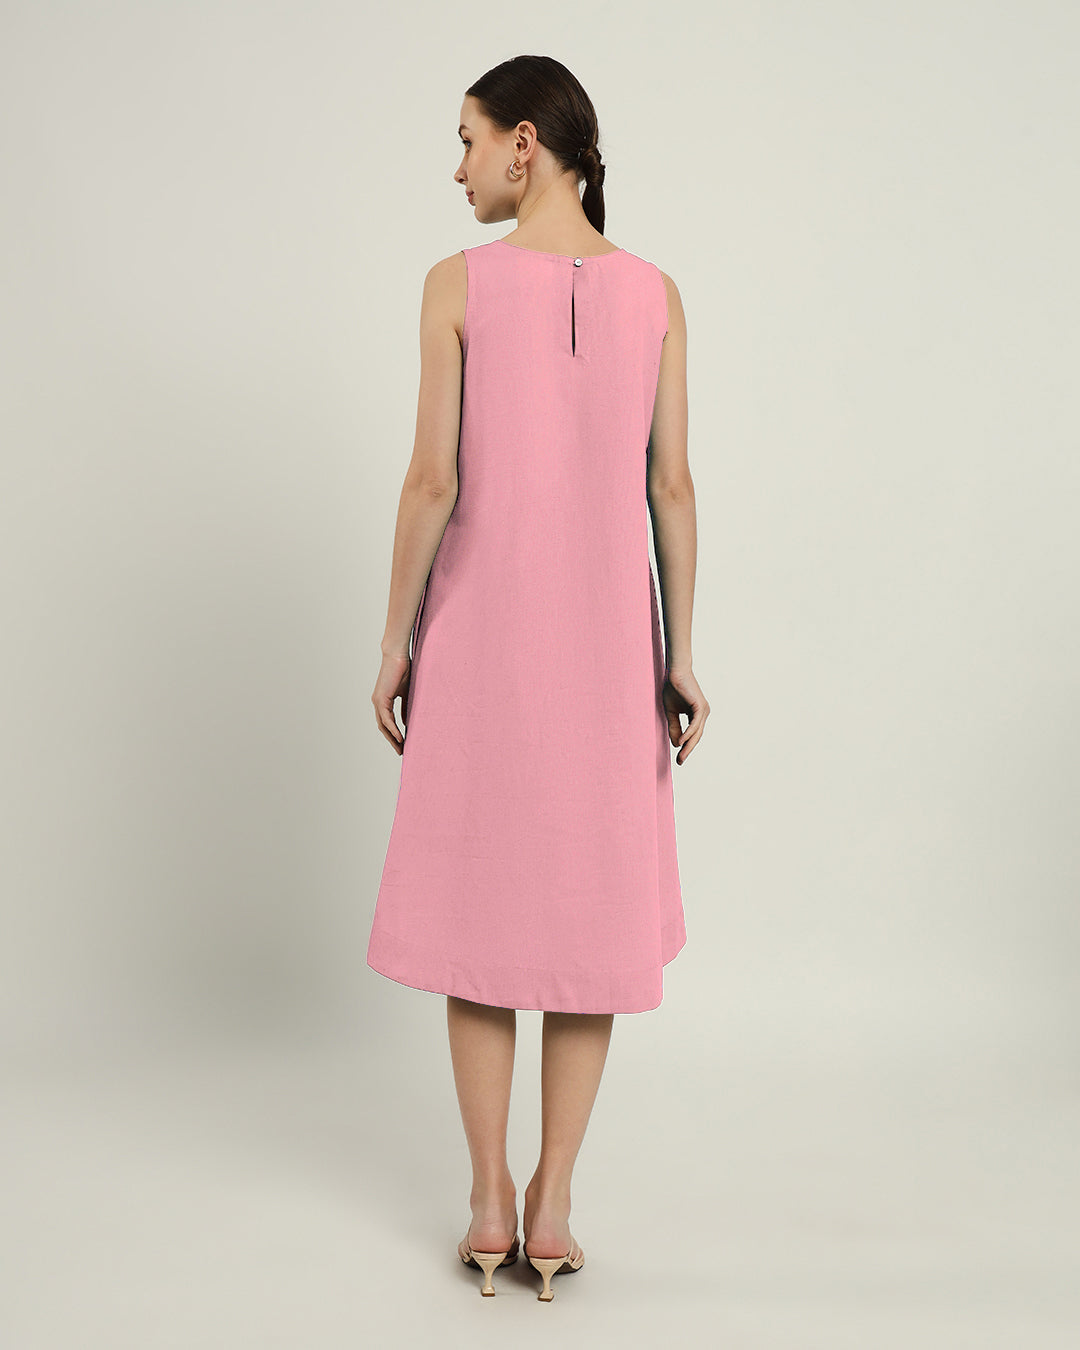 The Odesa Fondant Pink Dress